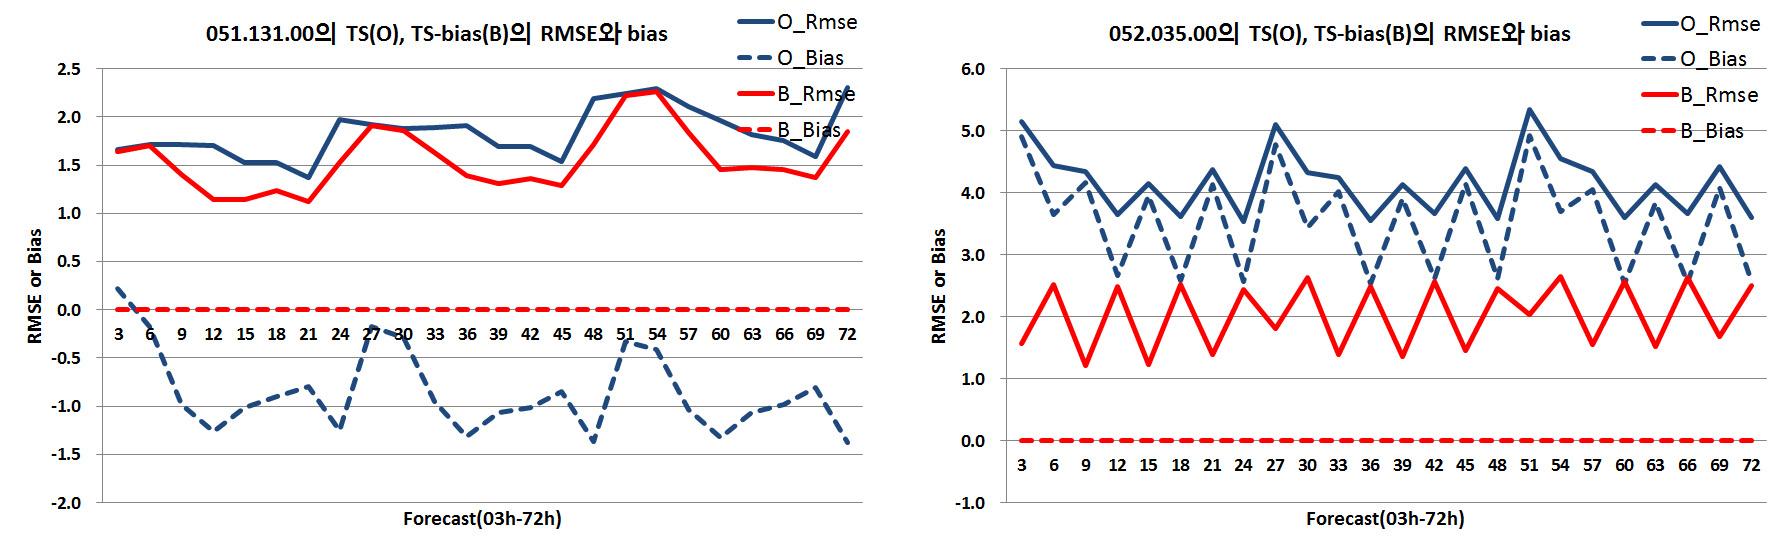 Deterioration of RMSE wave phenomena due to Bias.